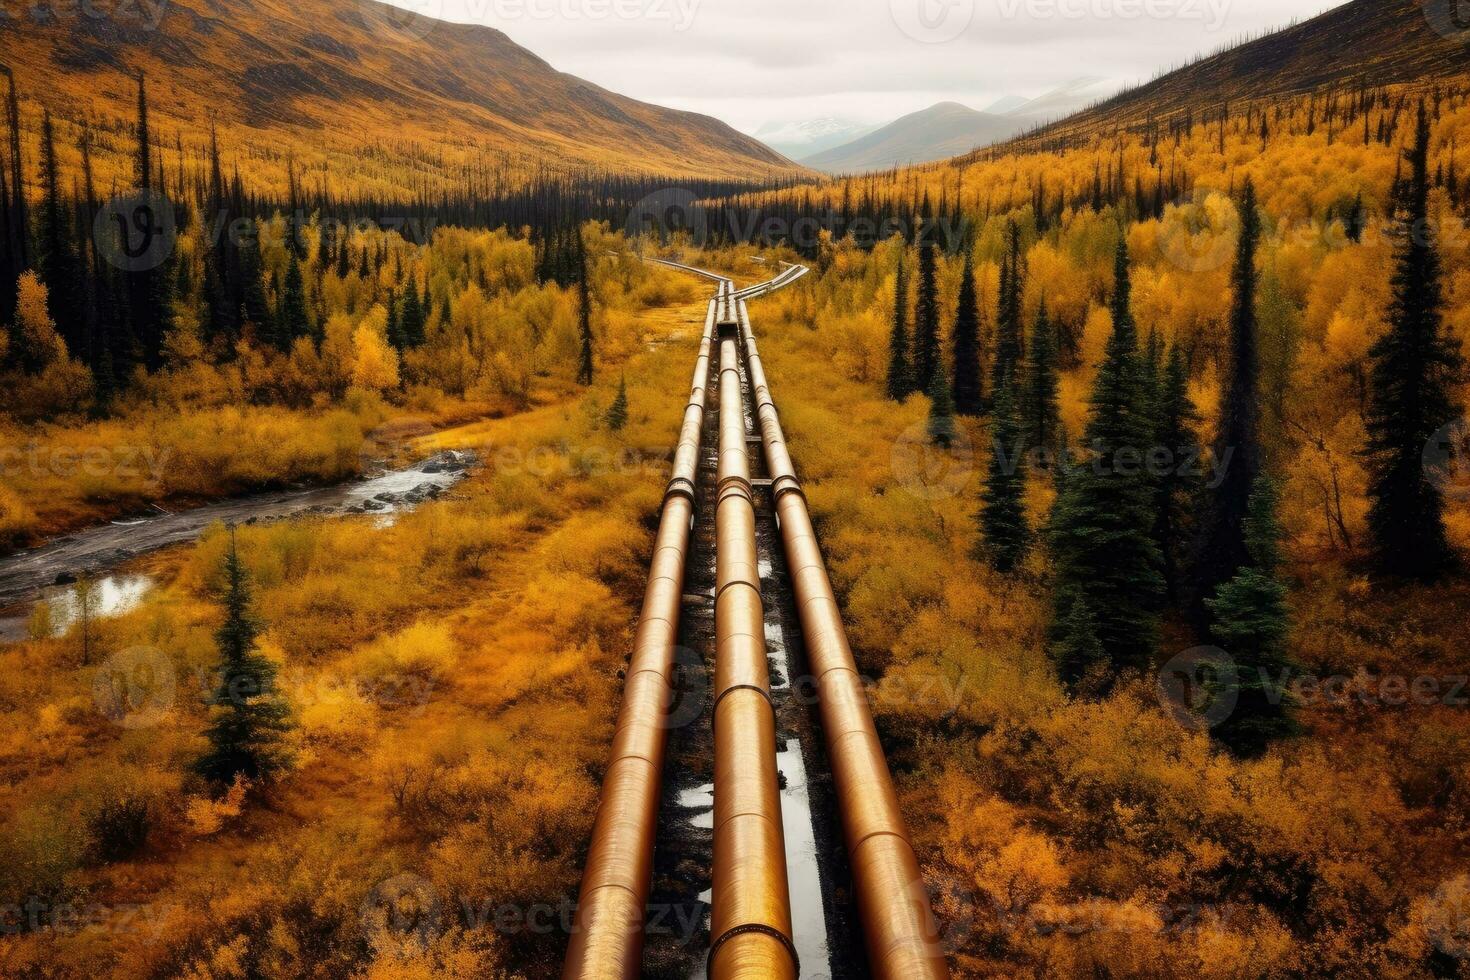 Oil pipelines through an remote terrain. Generative AI photo